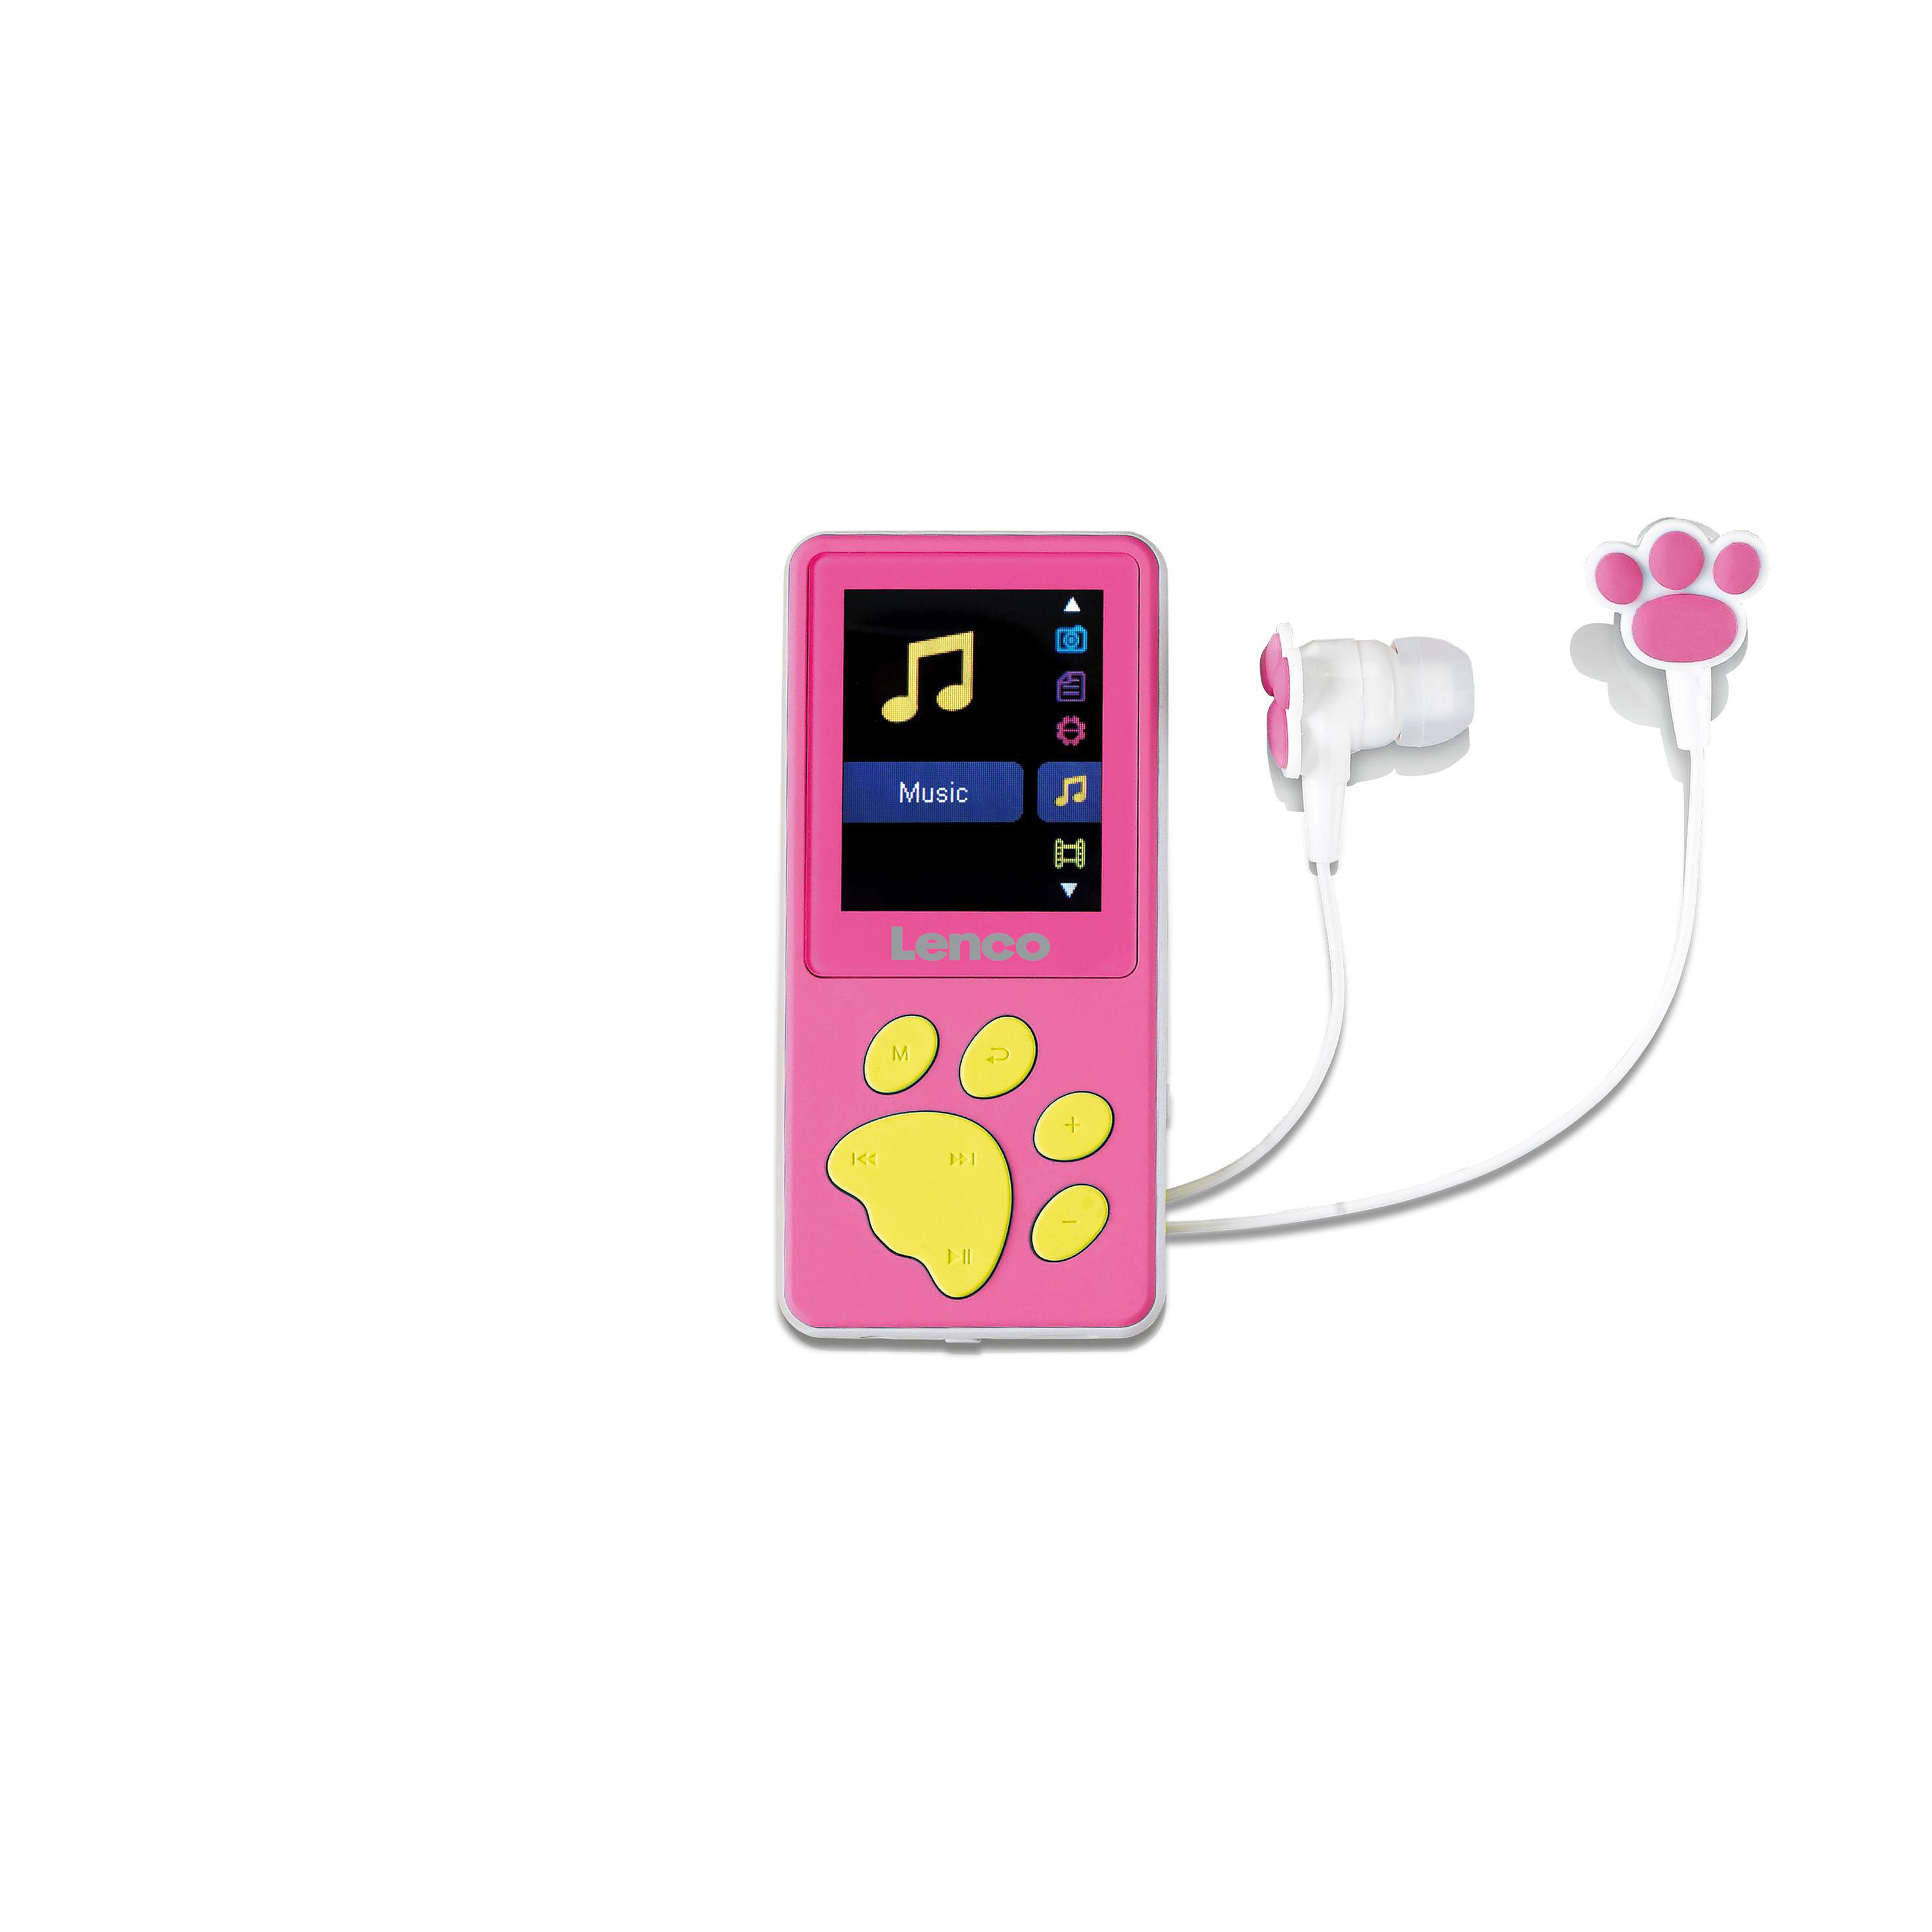 8 Player Pink GB, Xemio-560 MP3 LENCO